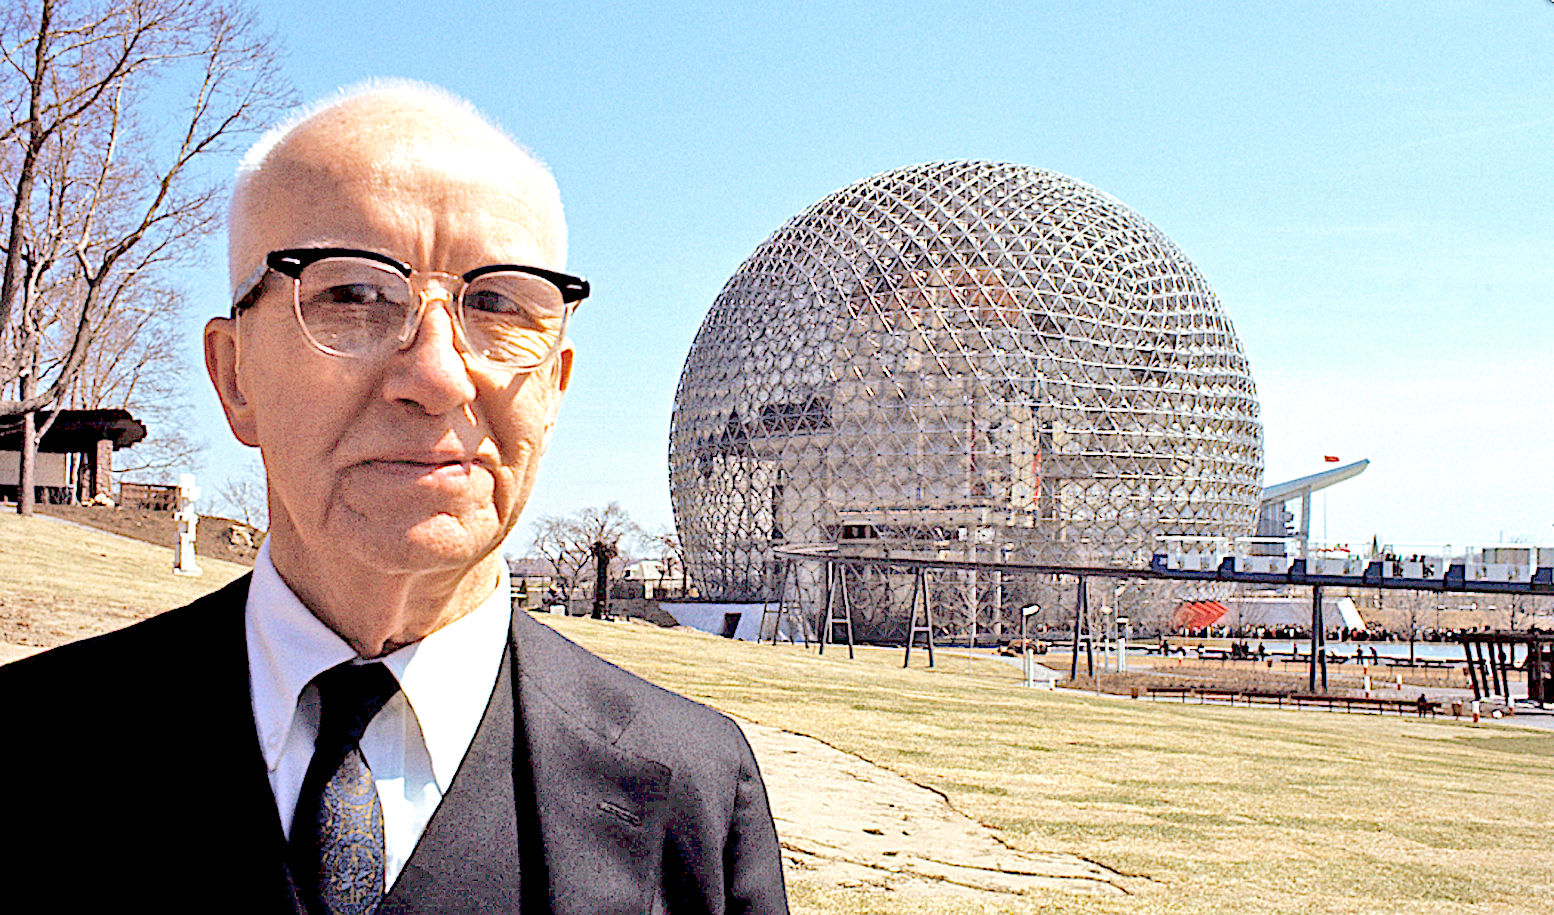 Photo of Buckminster Fuller outside Montreal Biosphere, Canada